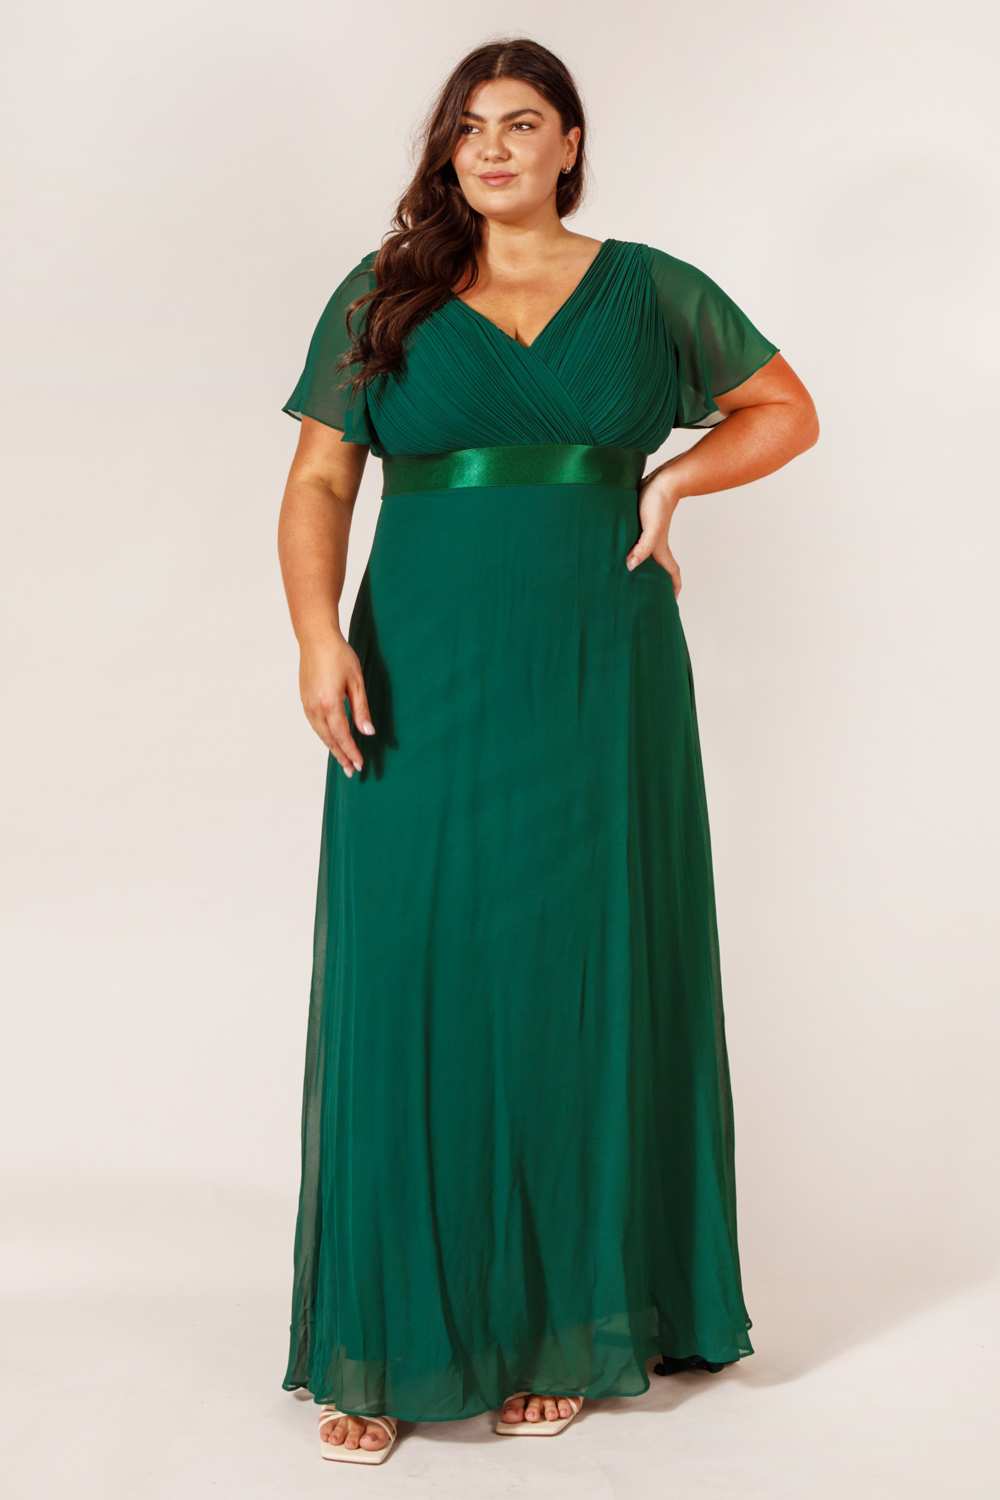 Savannah cheap bridesmaid dresses in emerald green